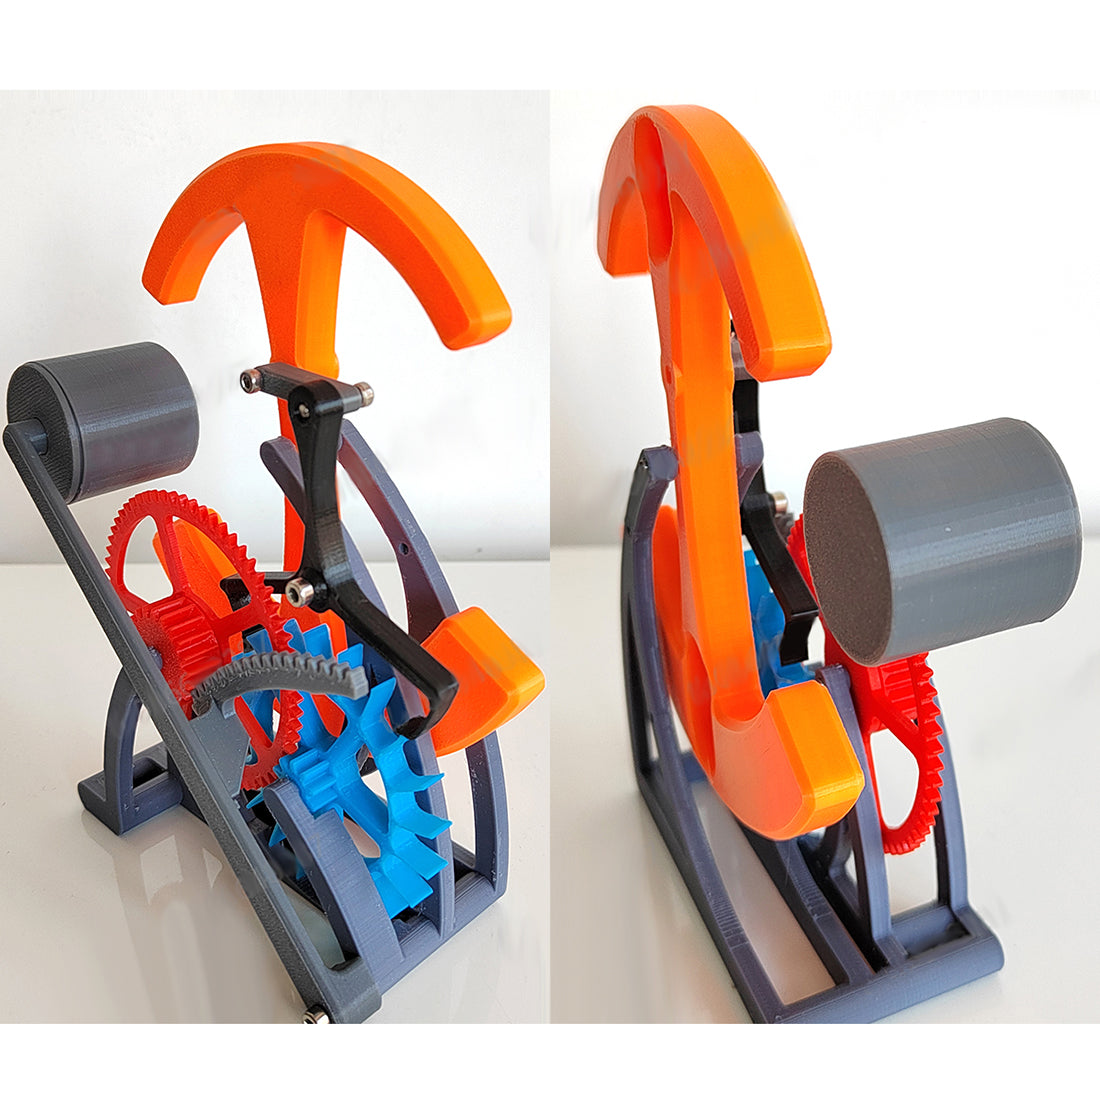 3D Printed Pendulum Ship Anchor Model, Gear Table Model DIY Assembly Model